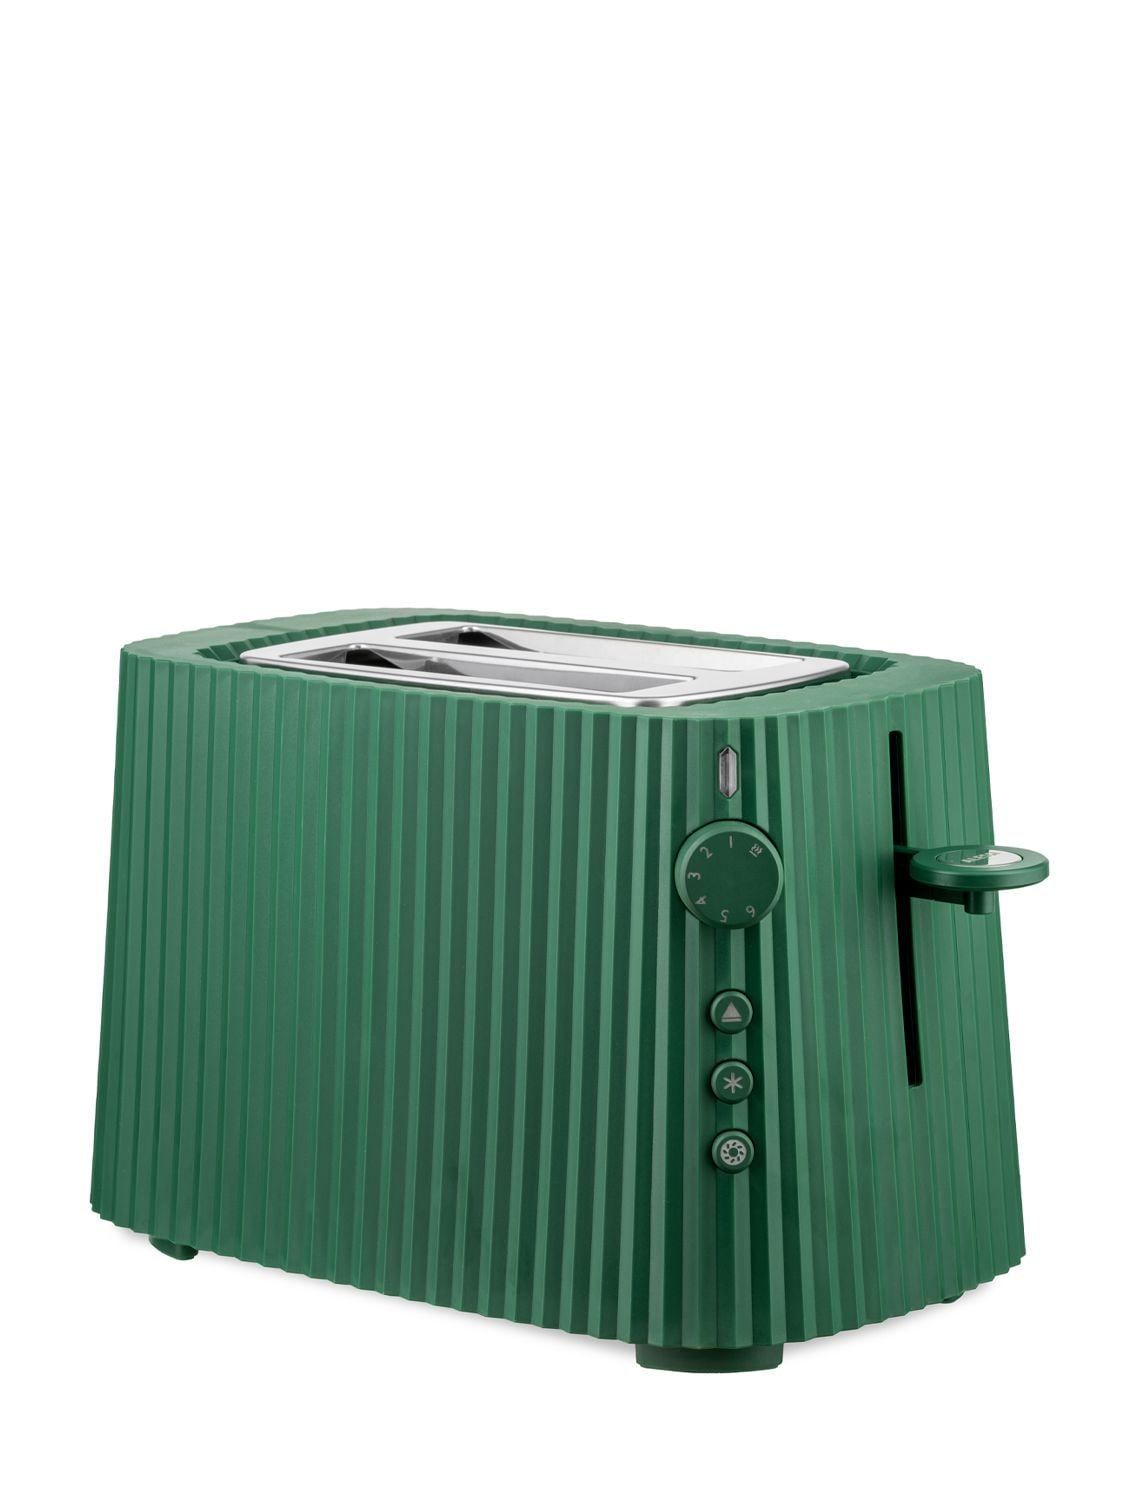 Image of Plissé Electric Toaster